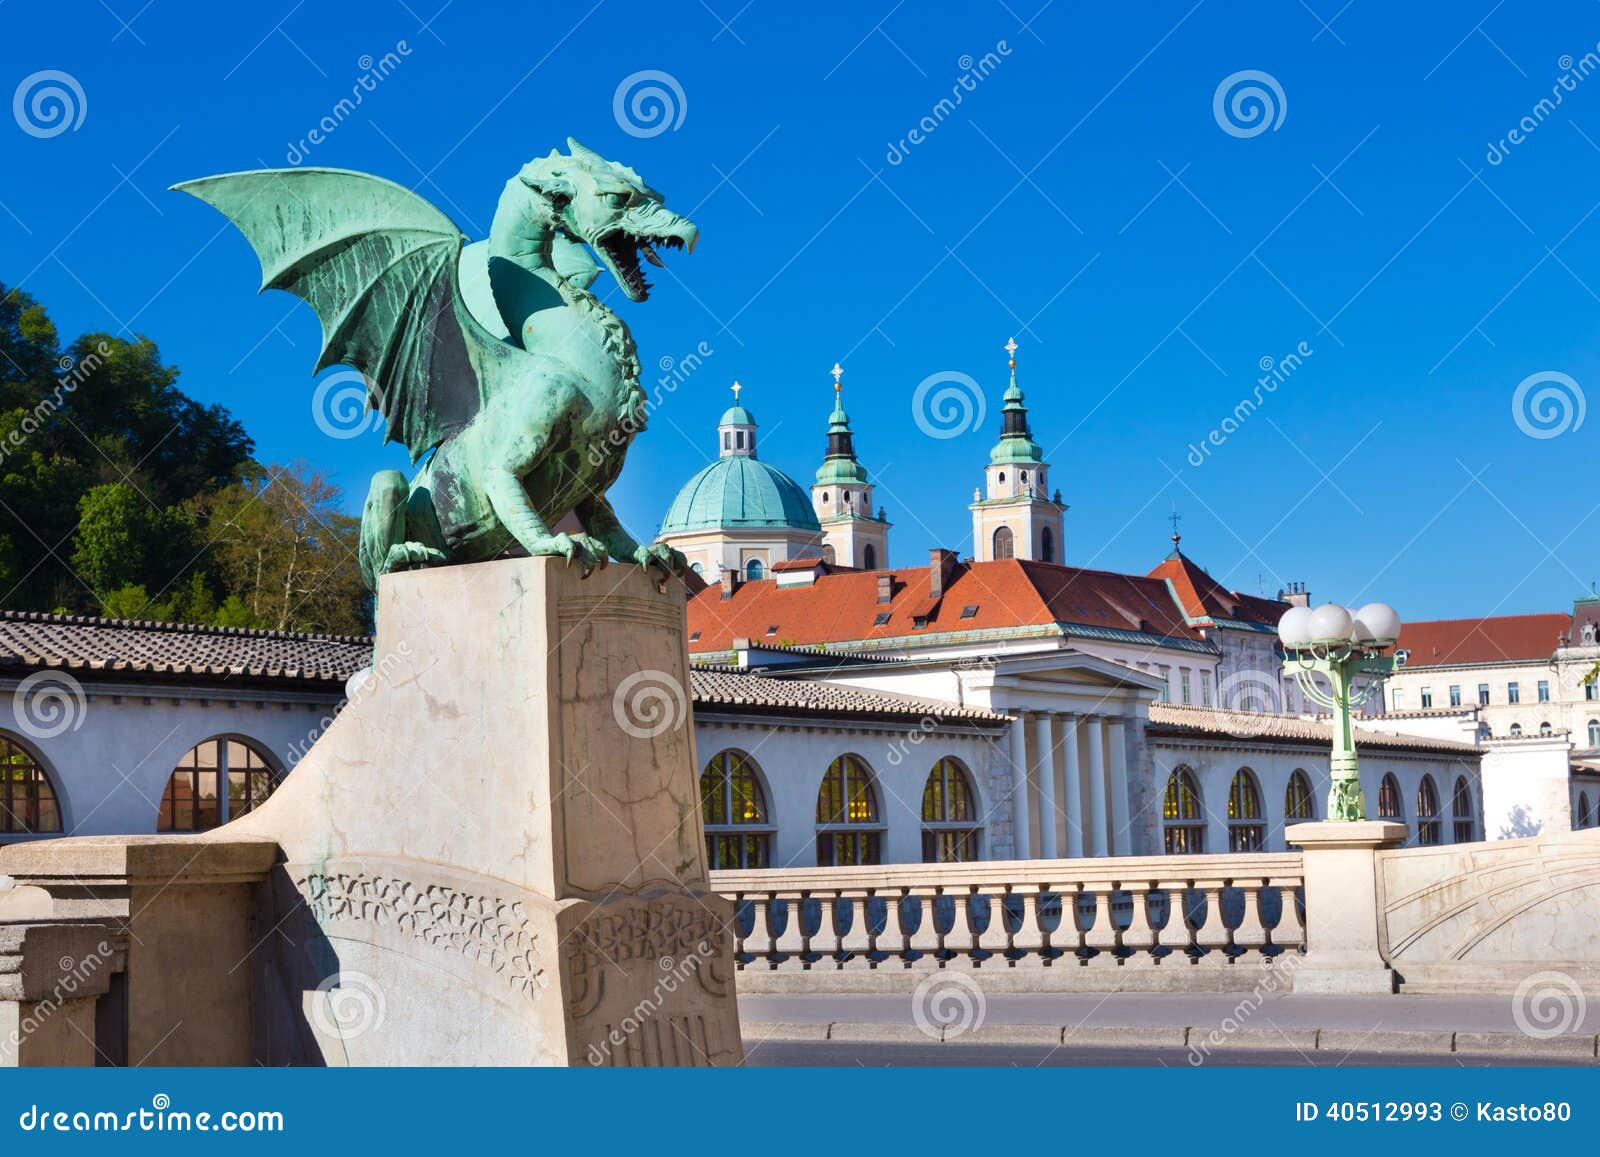 dragon bridge, ljubljana, slovenia, europe.